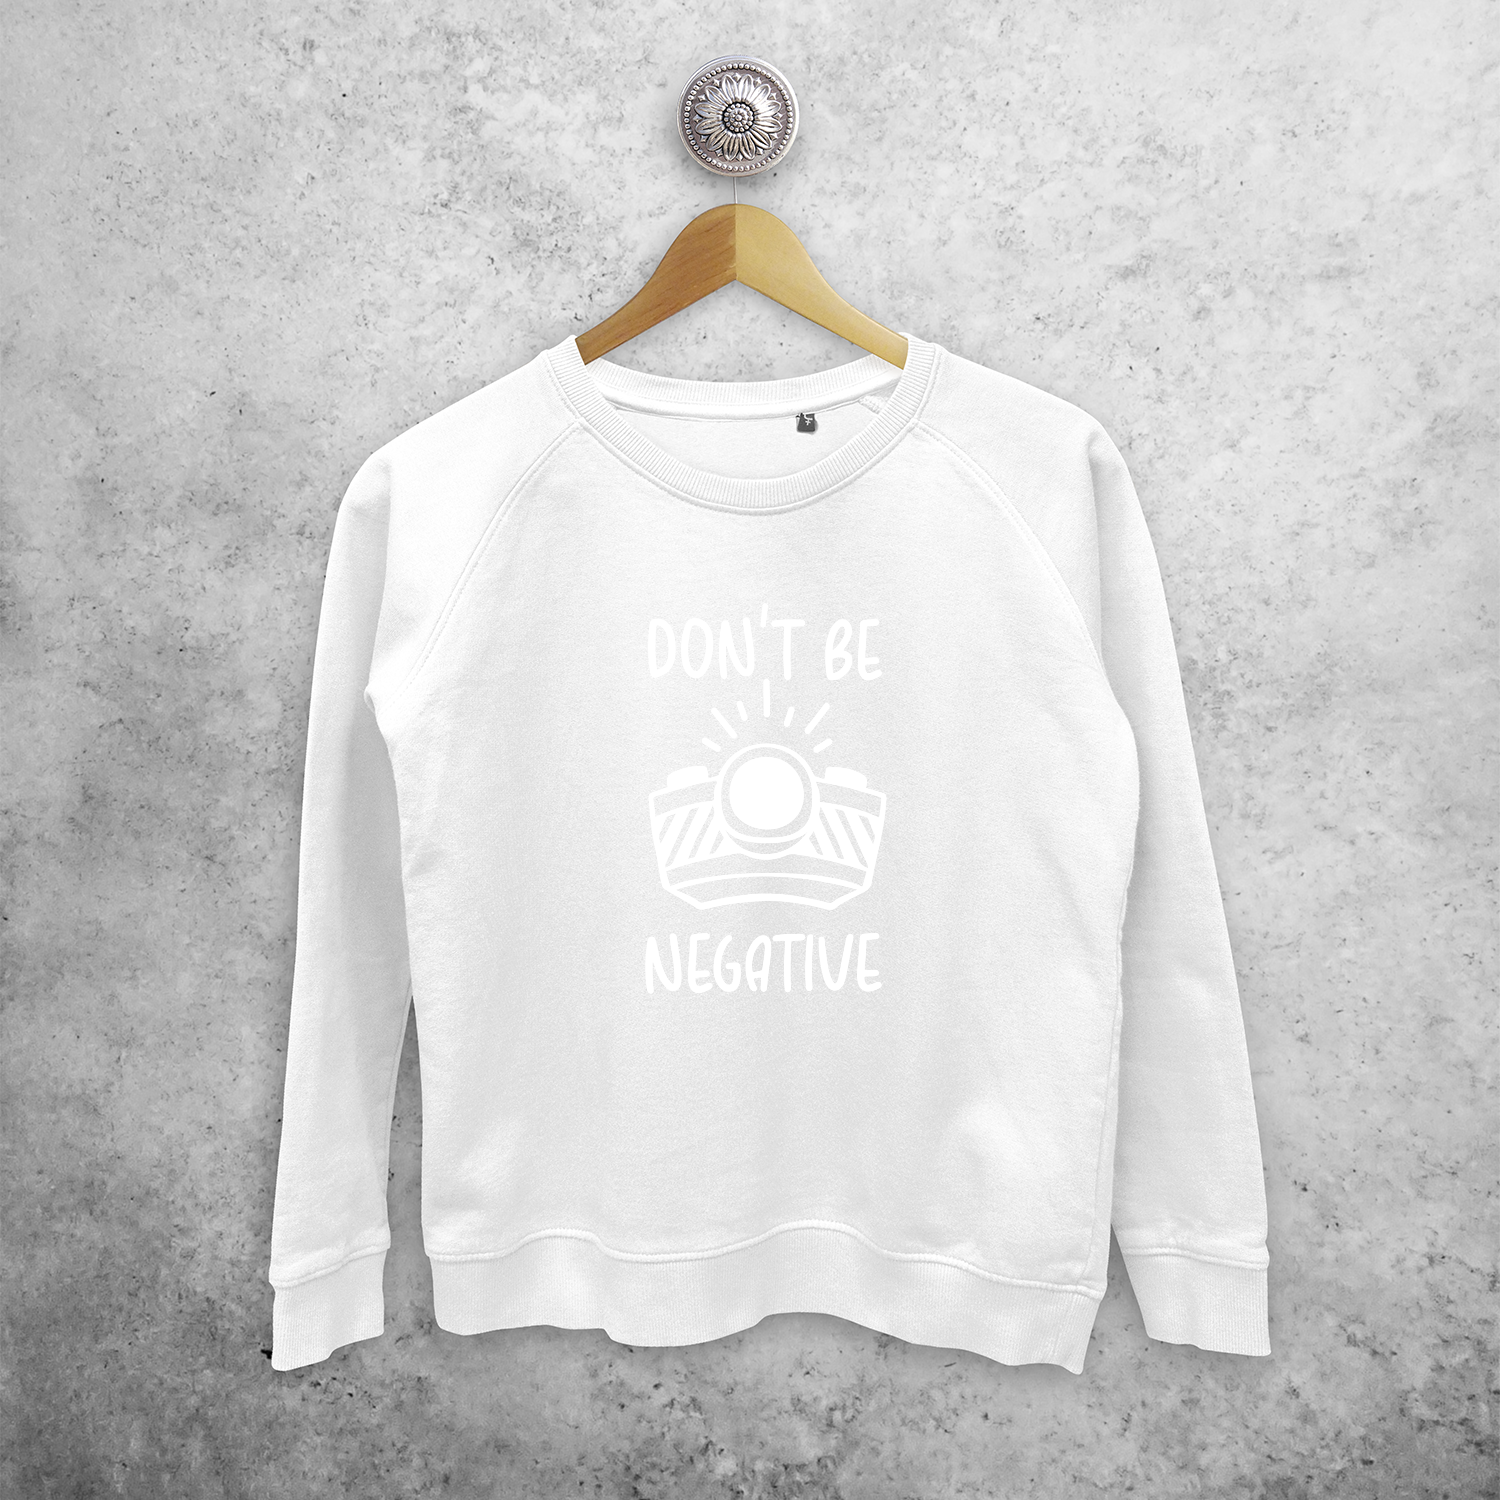 'Don't be negative' magic sweater